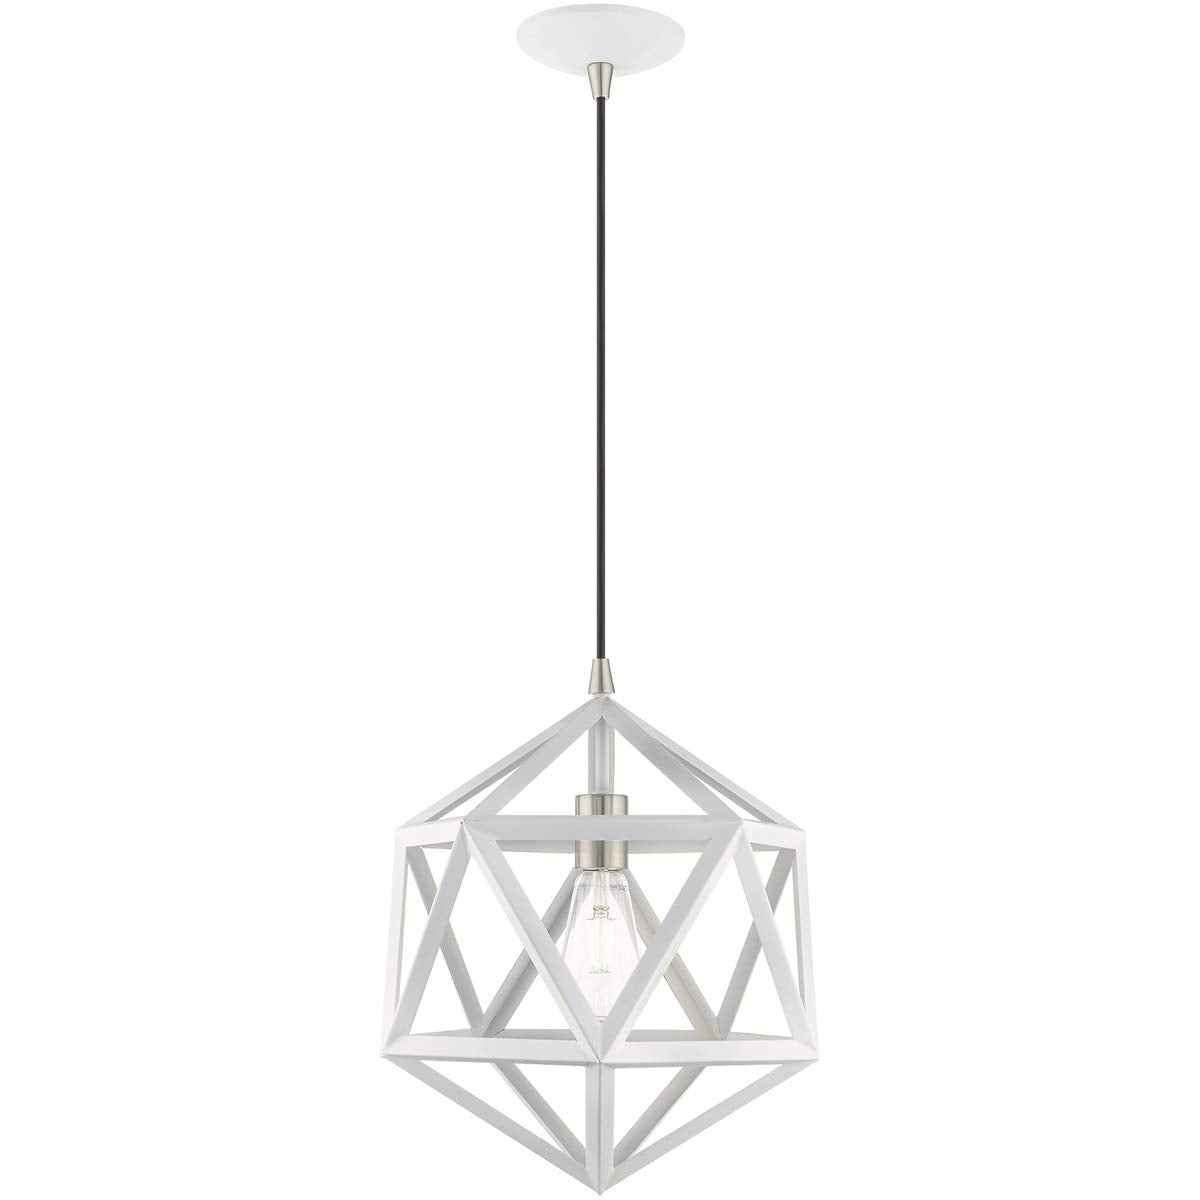 Livex Lighting 41328-03 Geometric Shade - 13" One Light Mini Pendant, White Finish with White Metal Shade